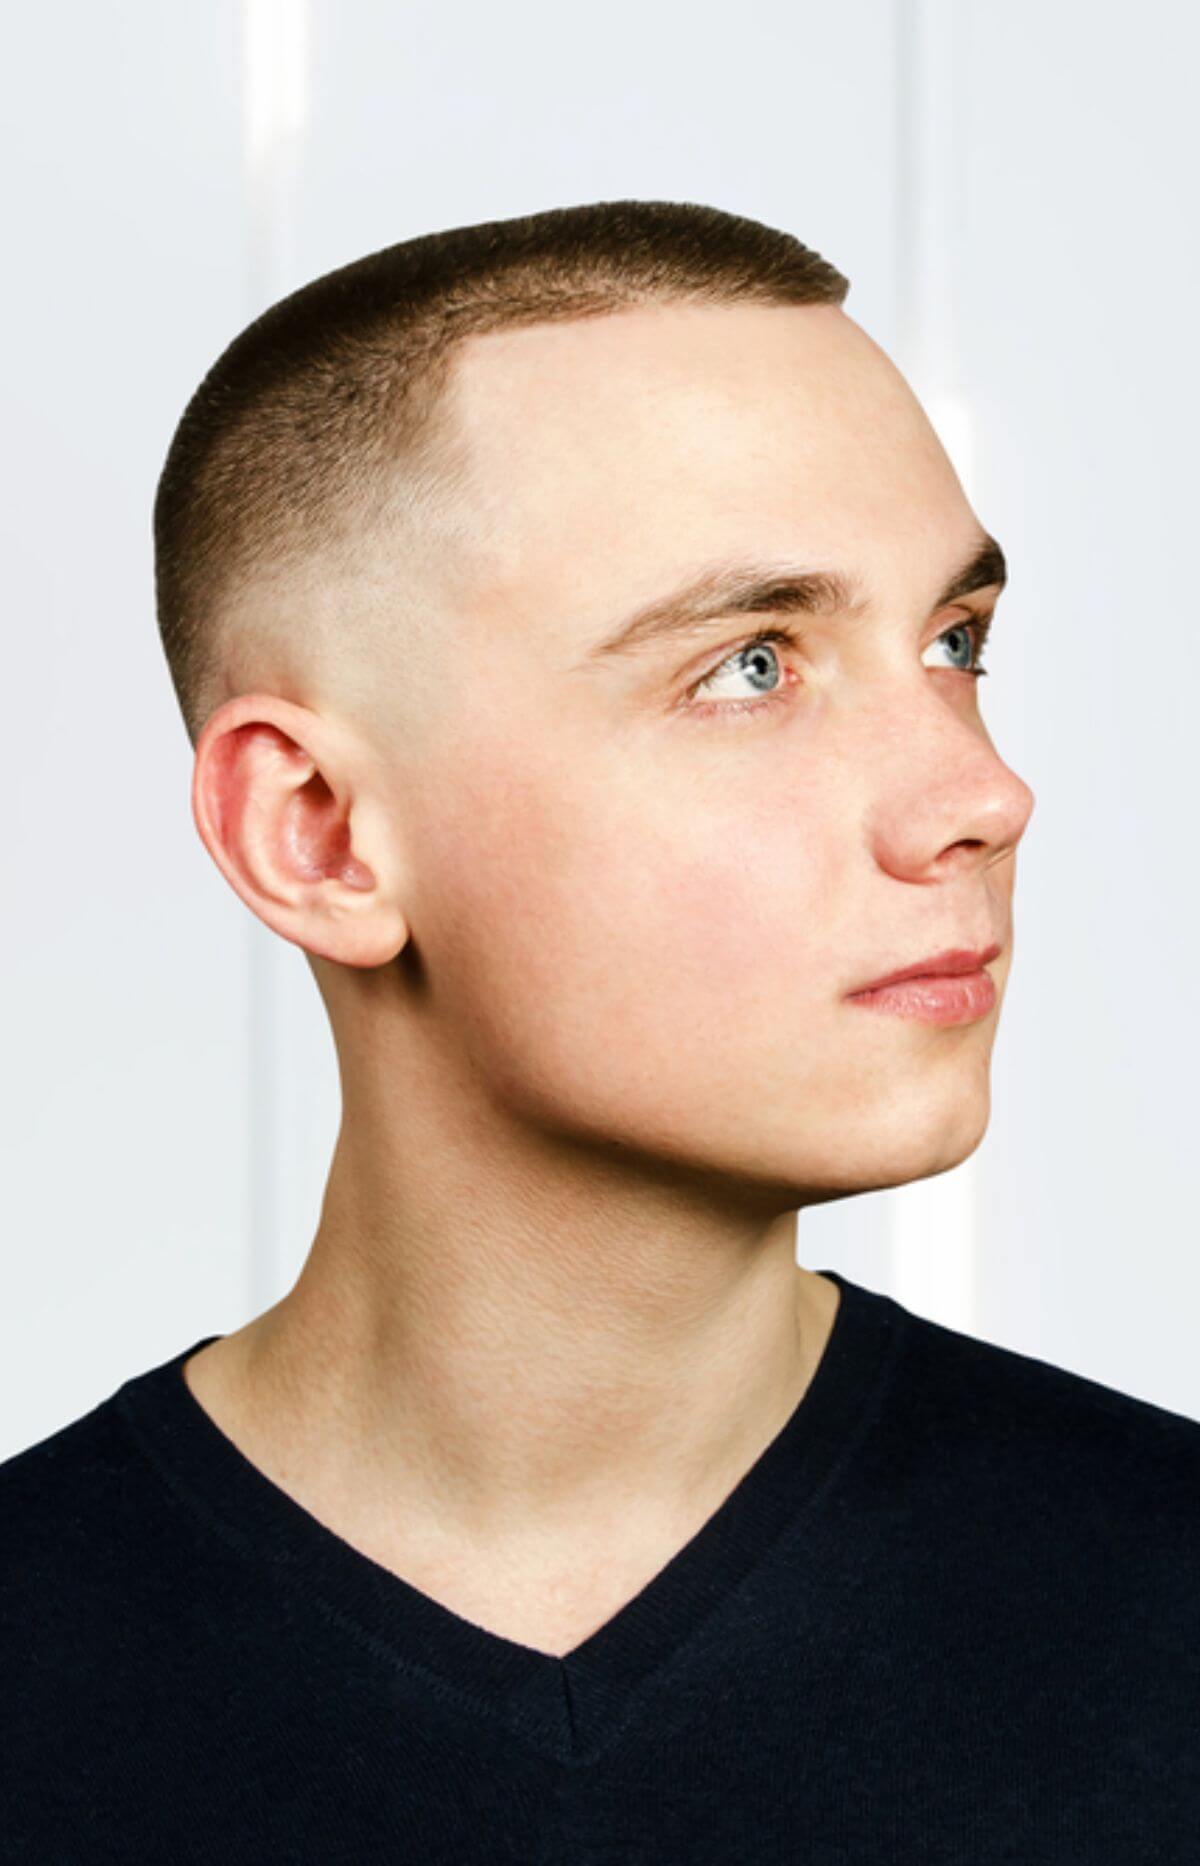 Hair Cut for Teenage Guys in Australia | MENSCO BARBER SHOP